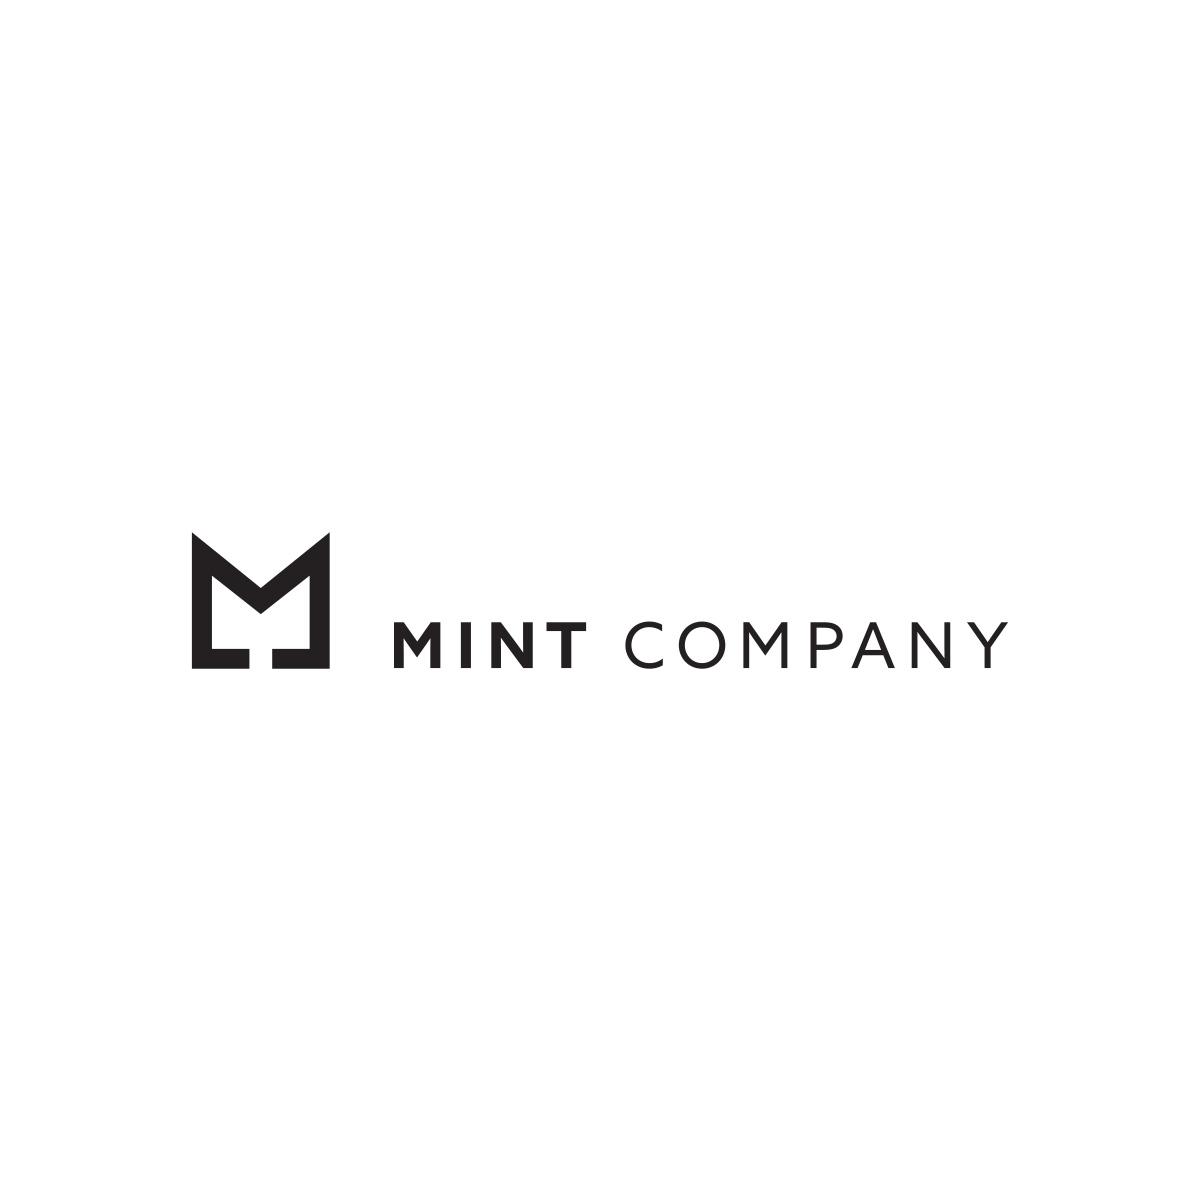 Mint Company Oy